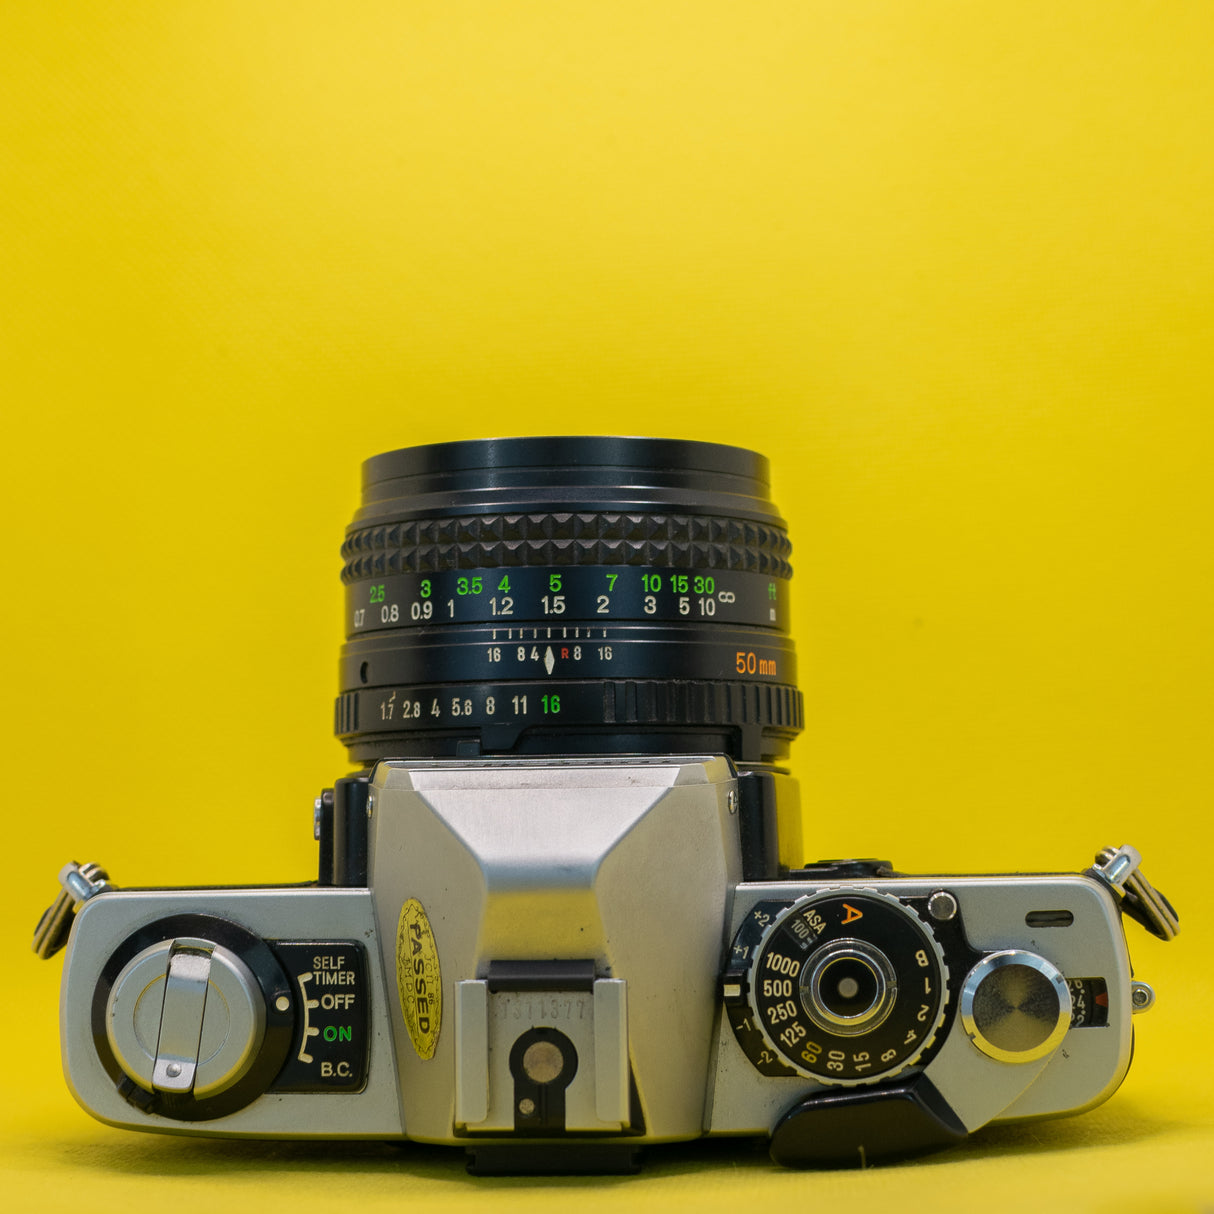 Minolta XG2 - Fotocamera reflex 35 mm